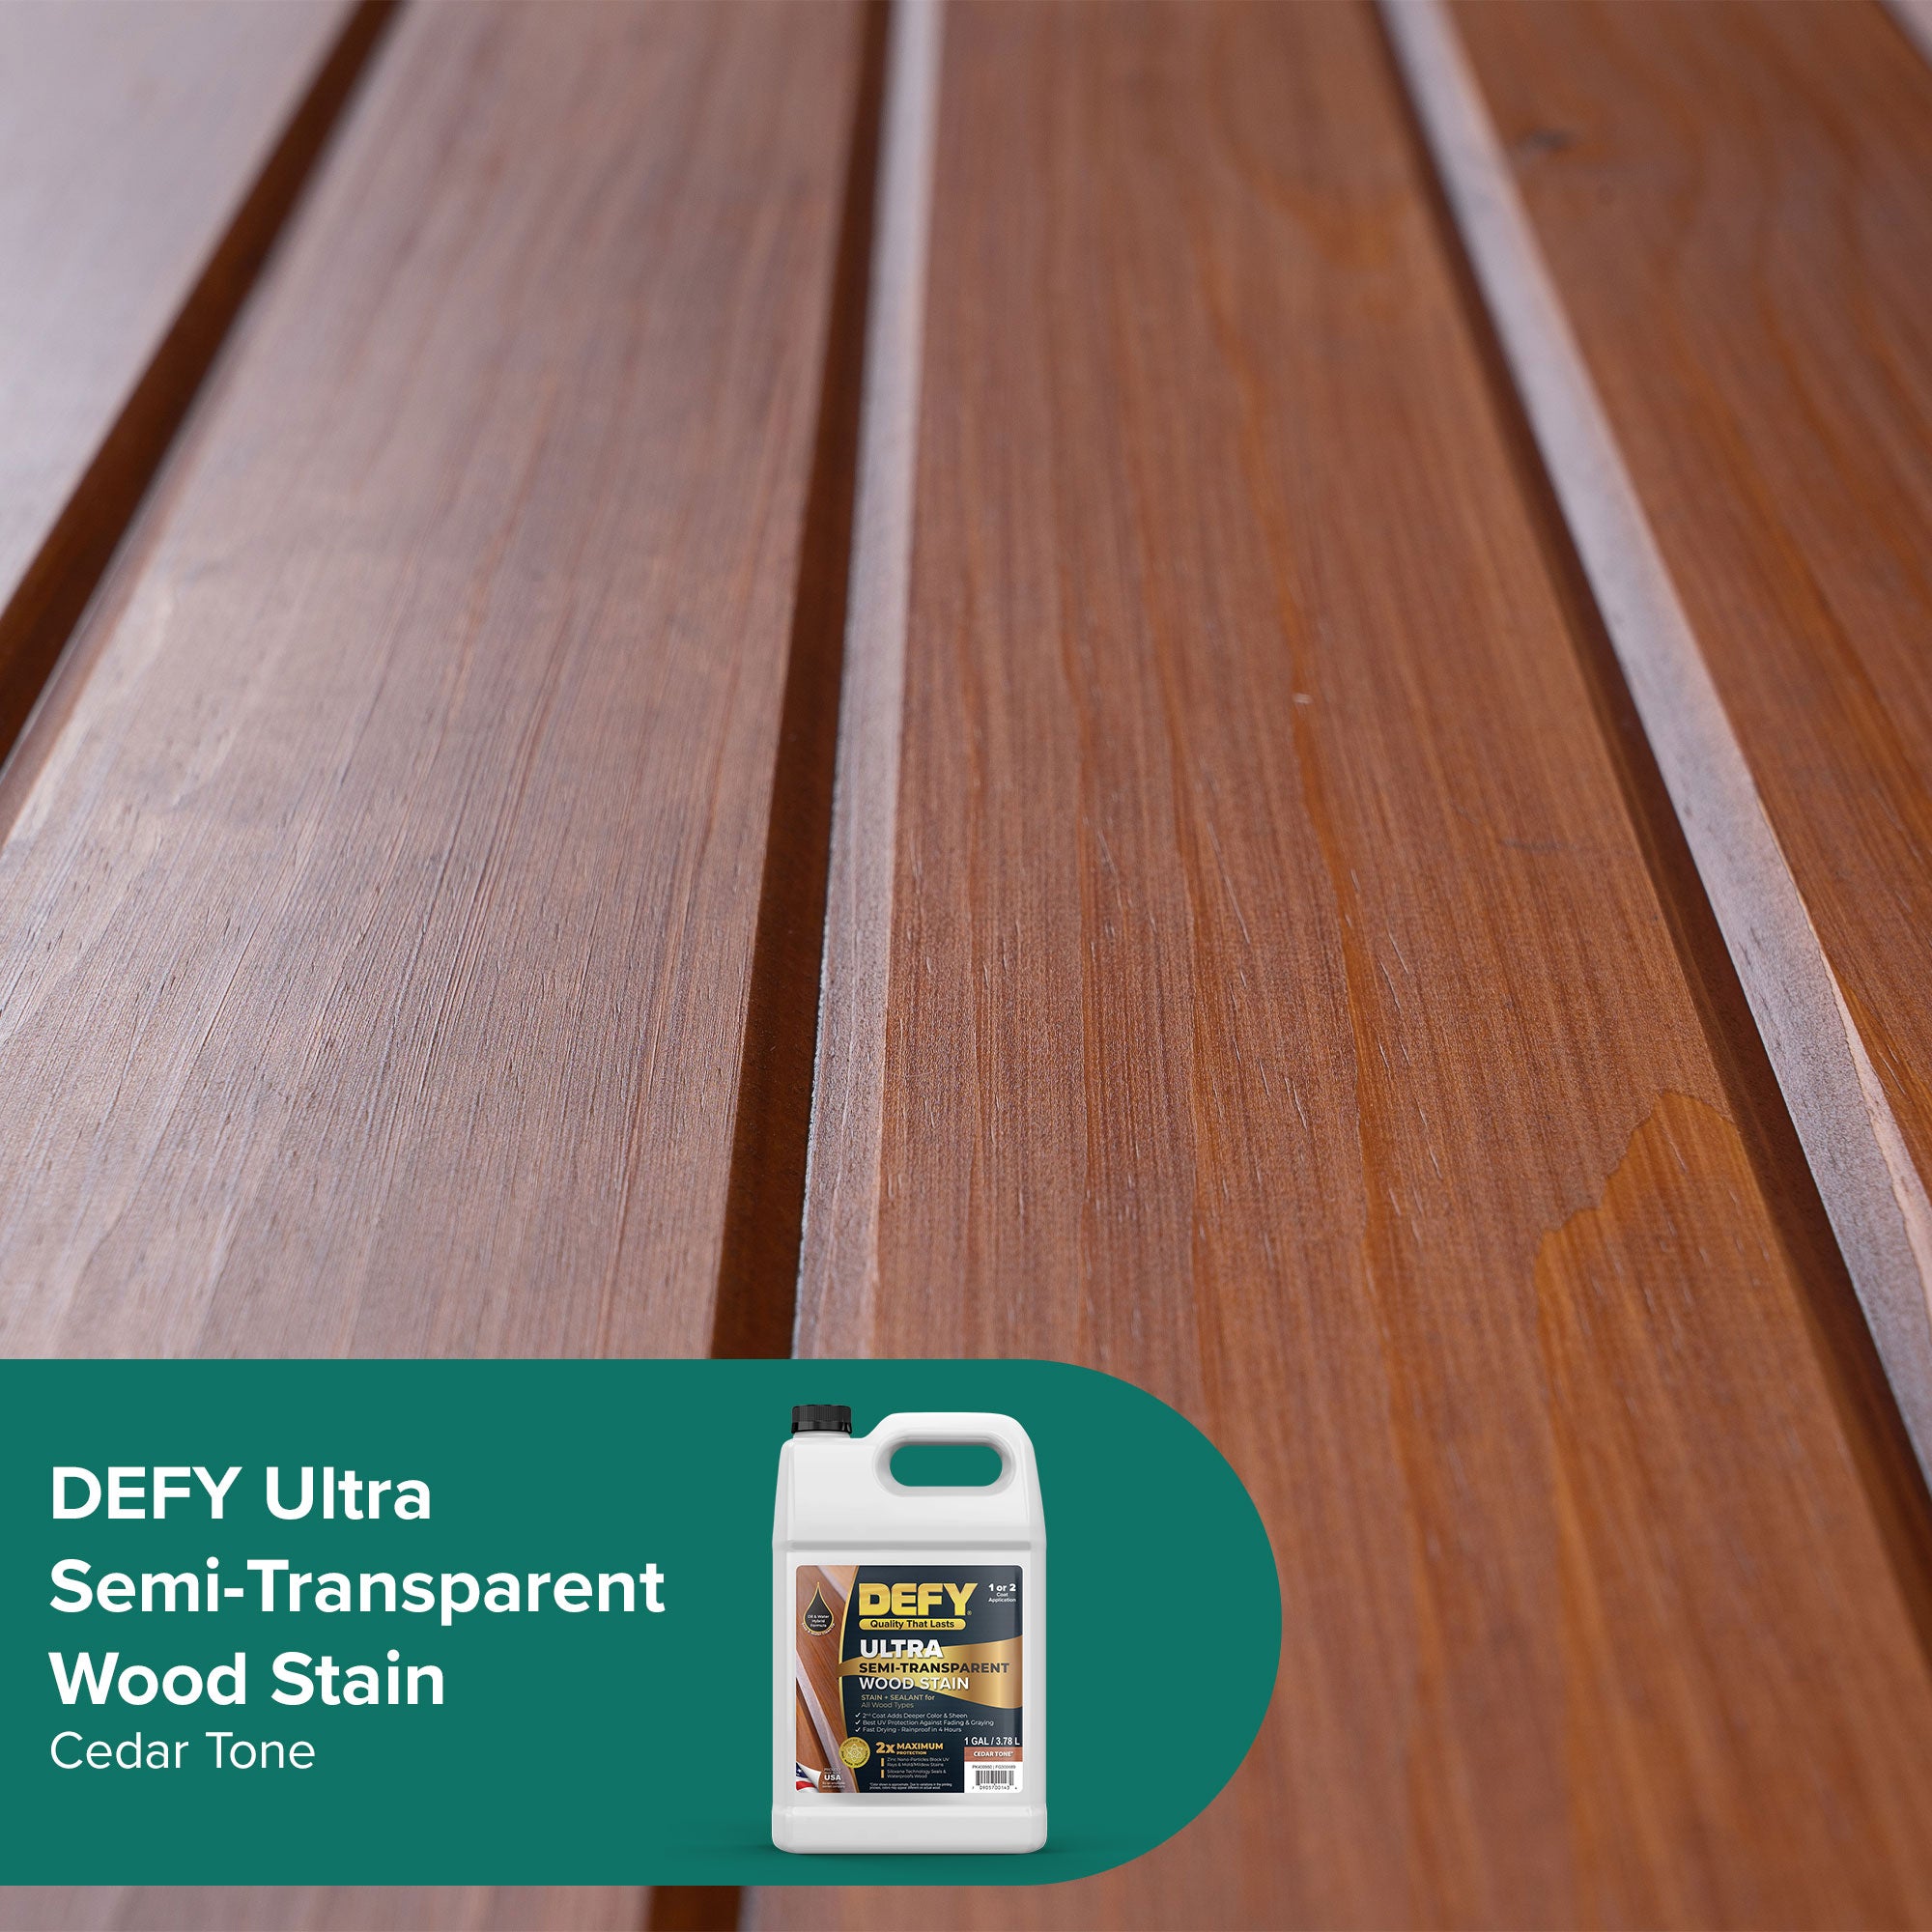 DEFY Ultra Semi-Transparent Wood Stain